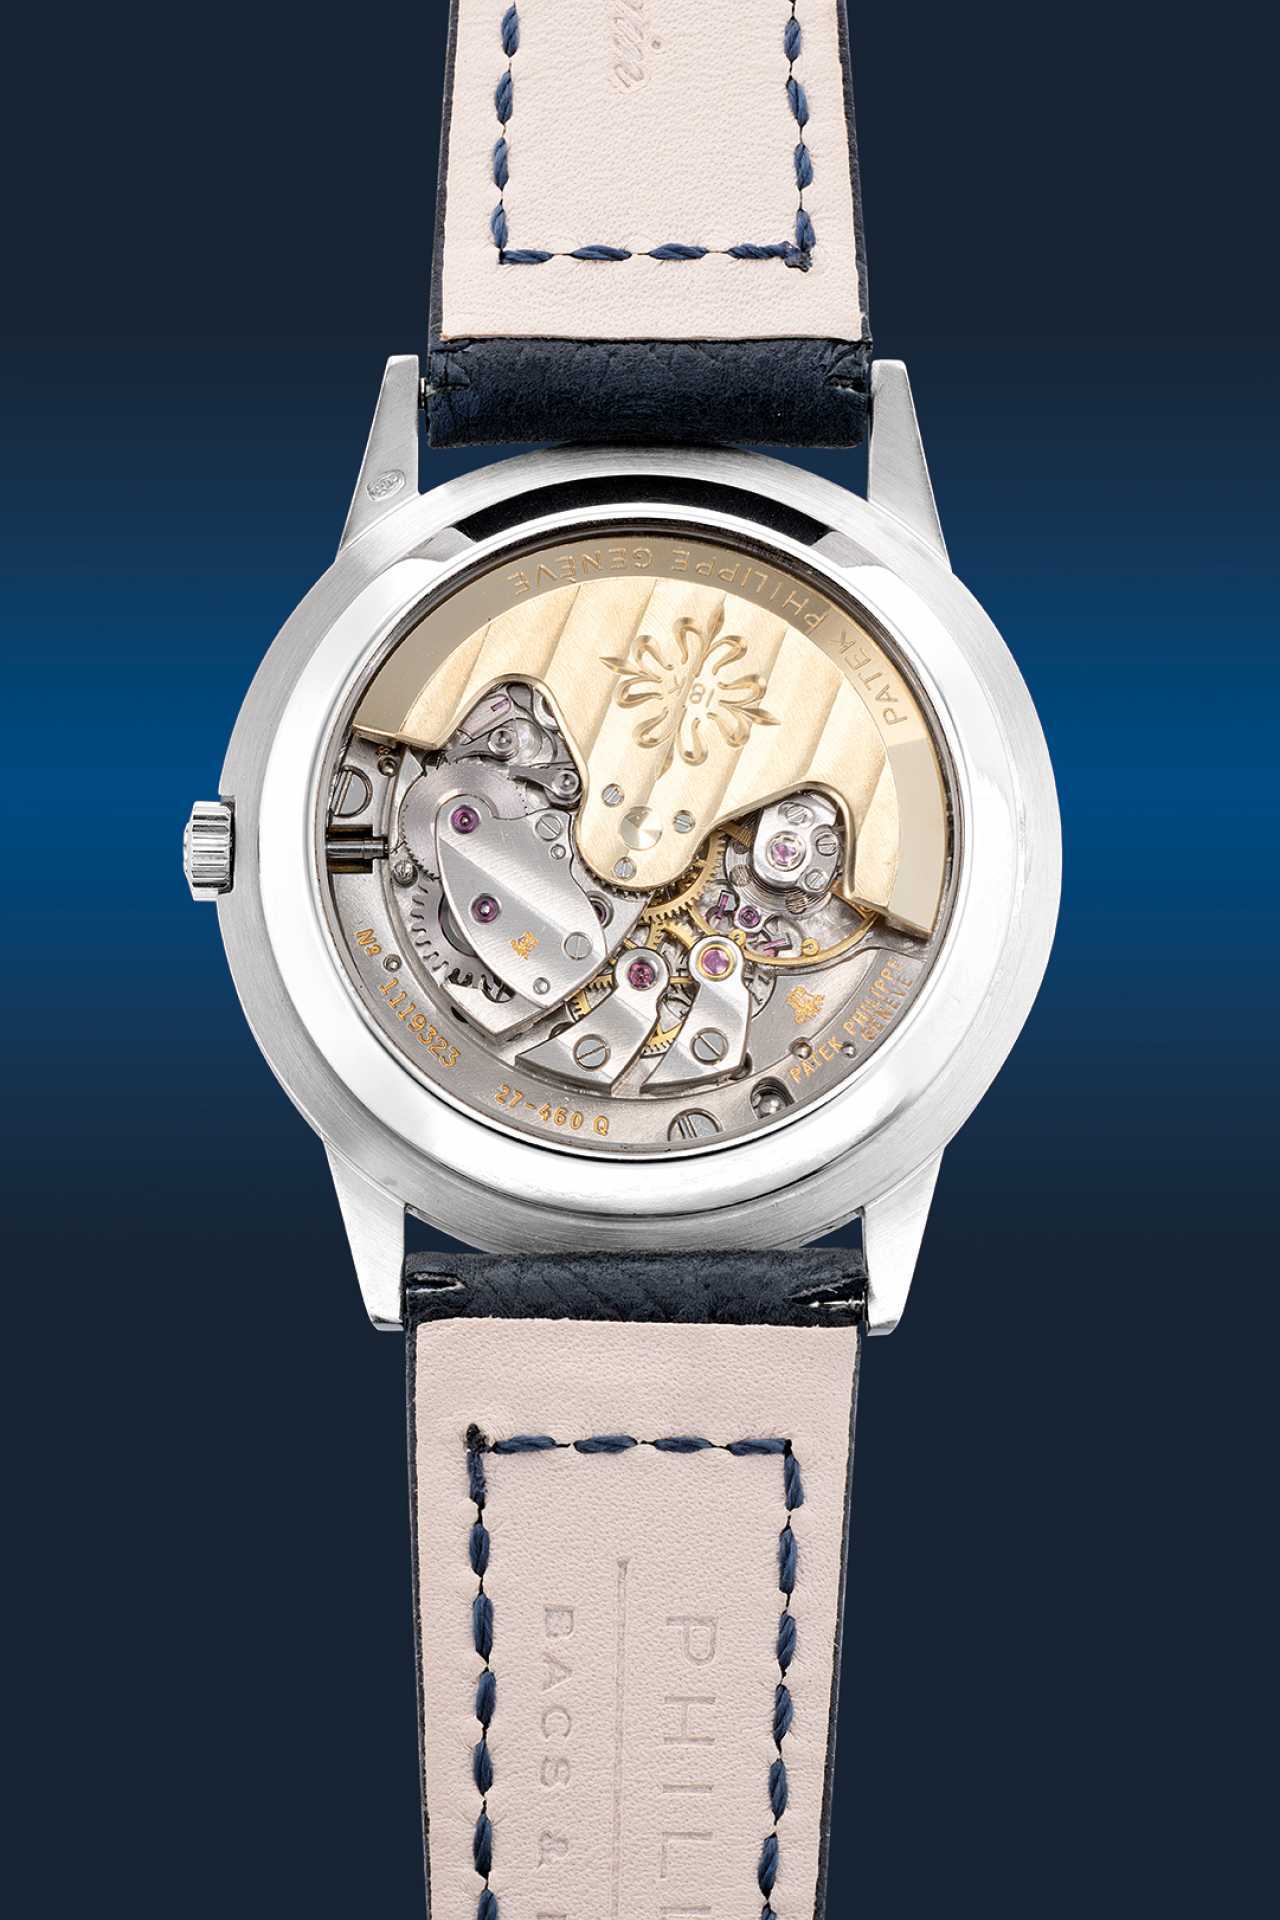 Patek Philippe “The Blue Royale” Ref 3448/100 vintage watch